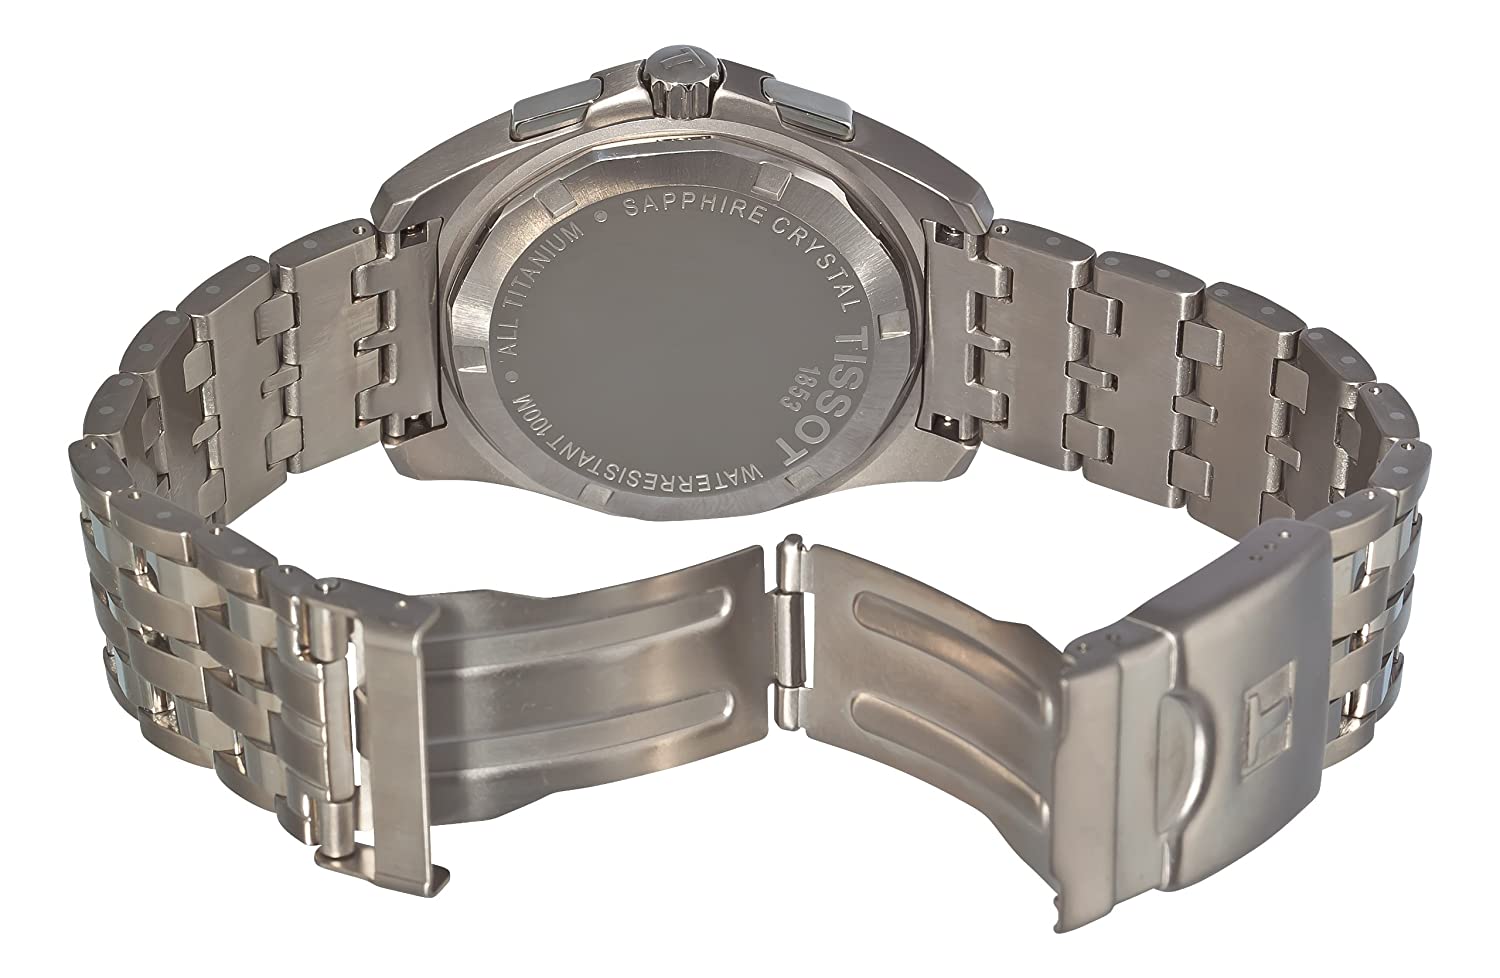 Tissot Swiss Made PRC 100 Chronograph Black Men's Titanium Watch T0084174406100 - Diligence1International